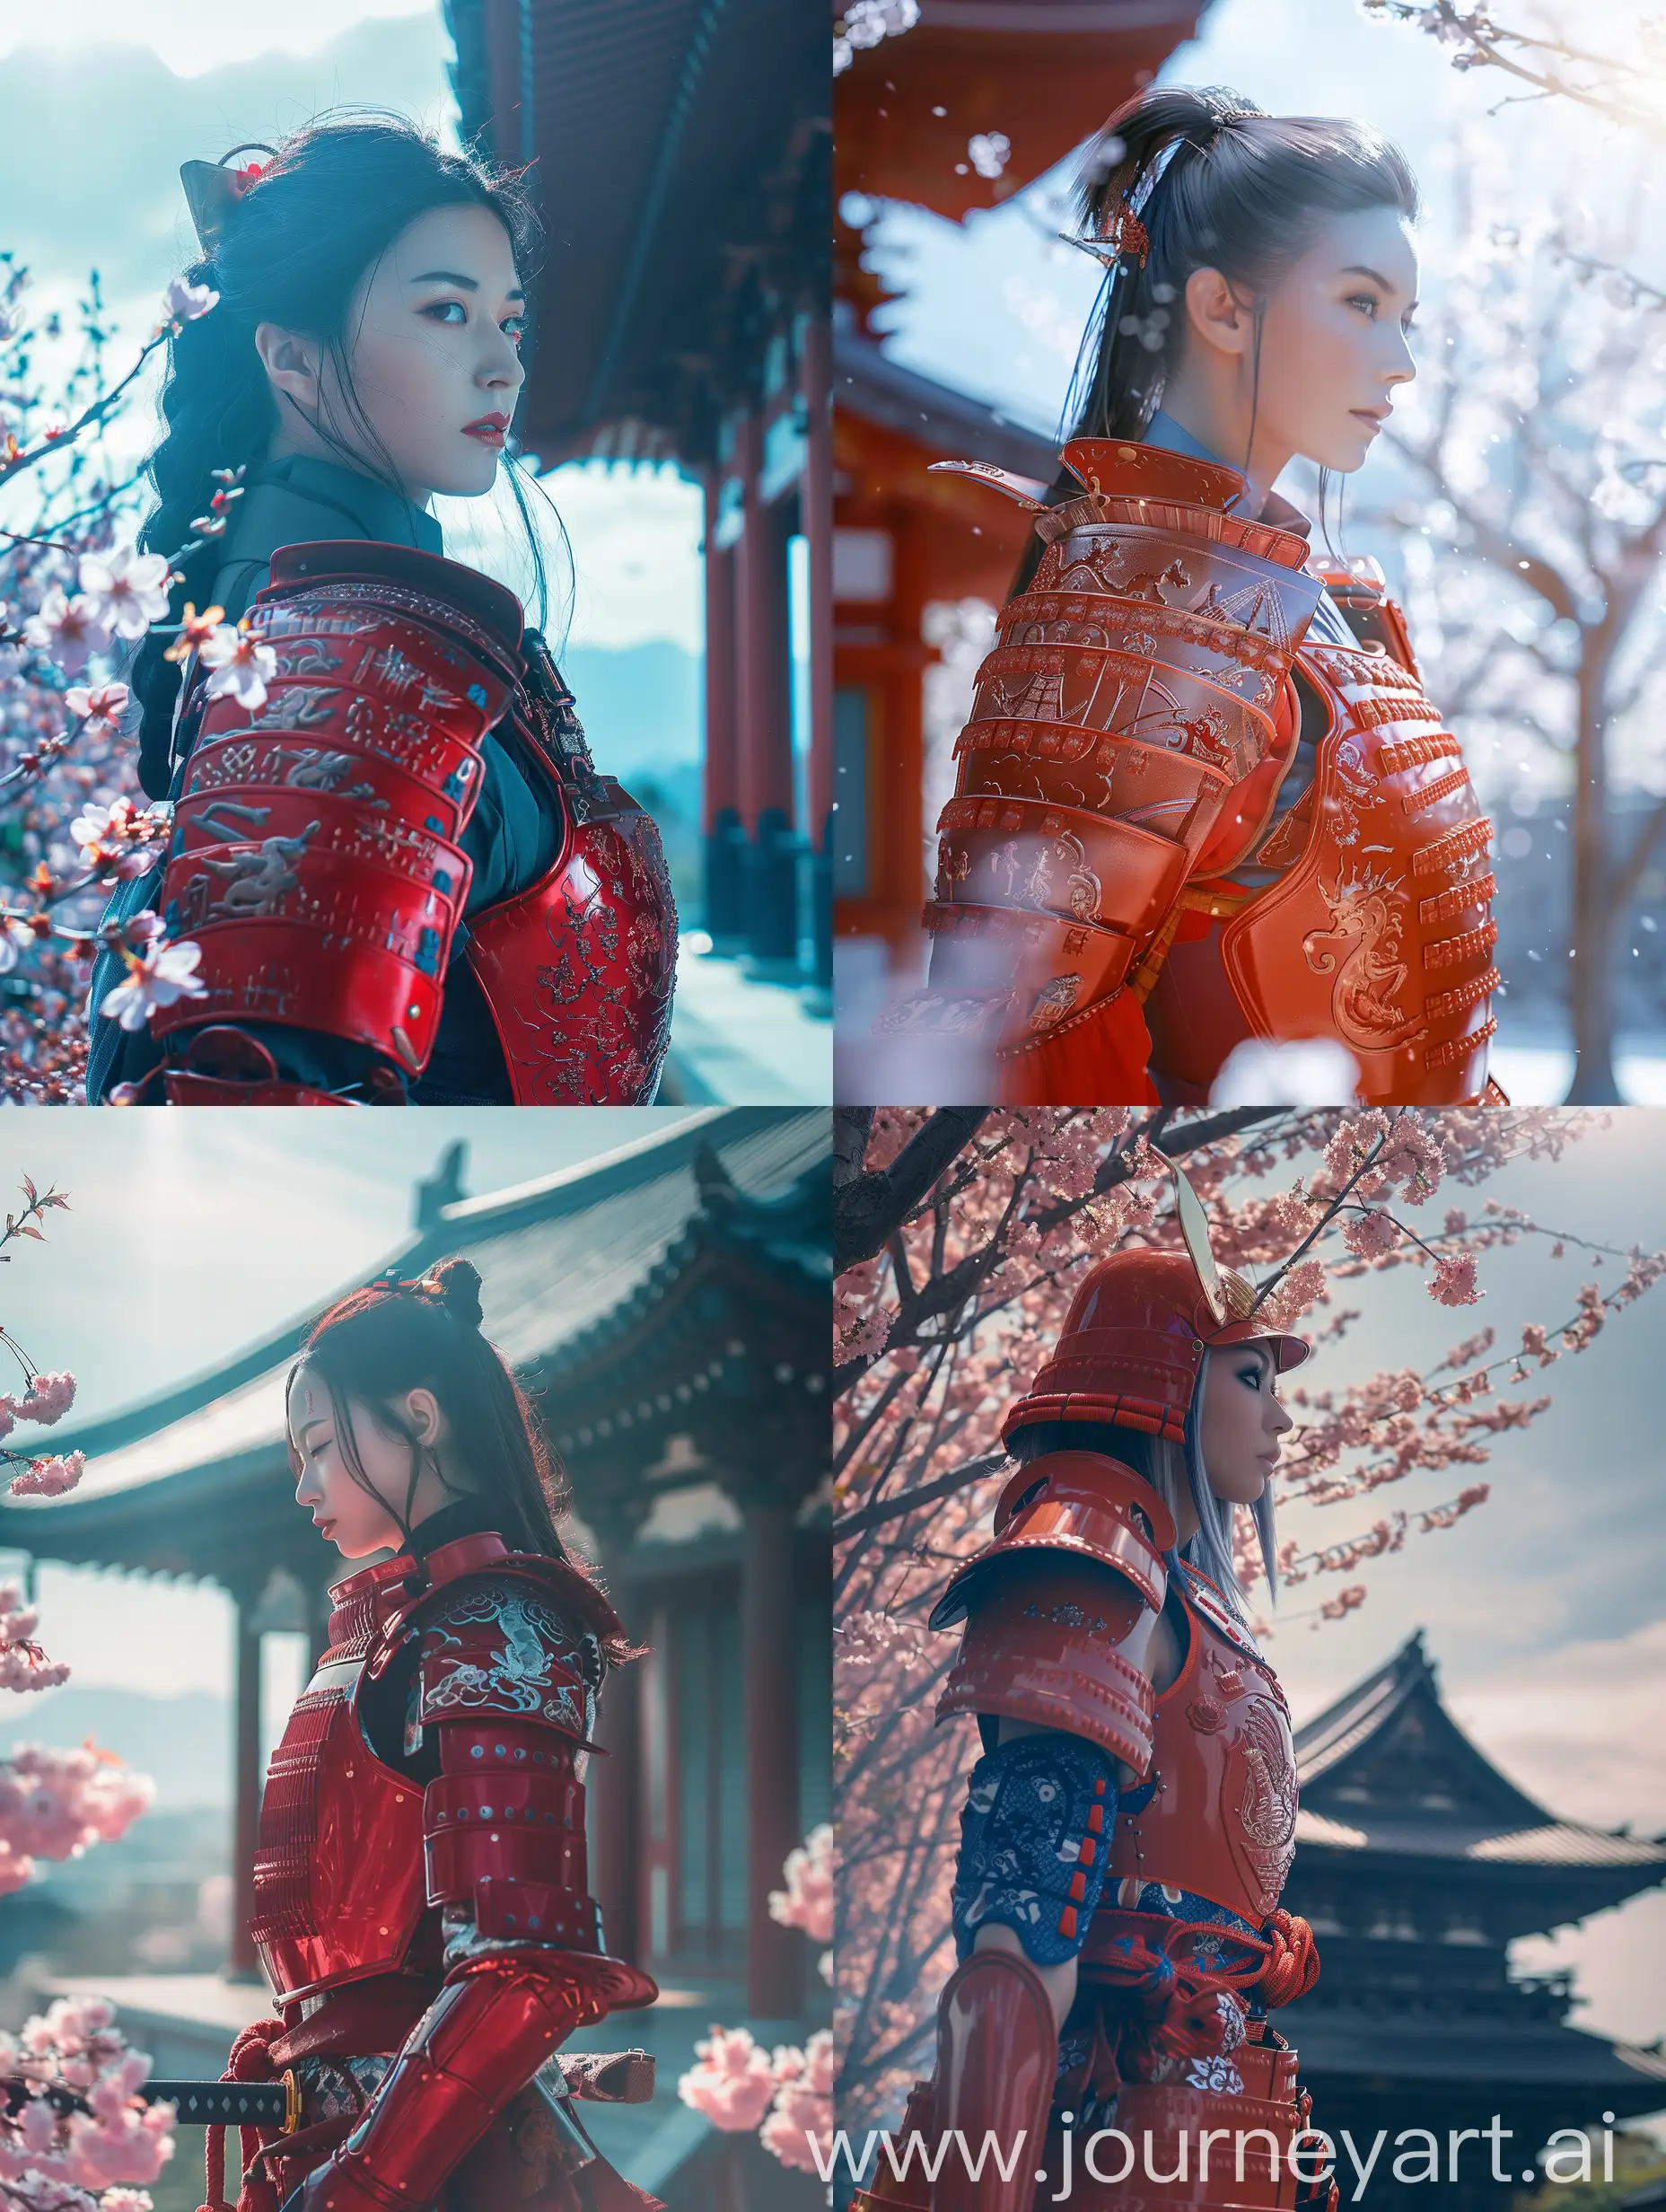 Elegant-Red-Samurai-Warrior-Amid-Cherry-Blossoms-at-Japanese-Temple